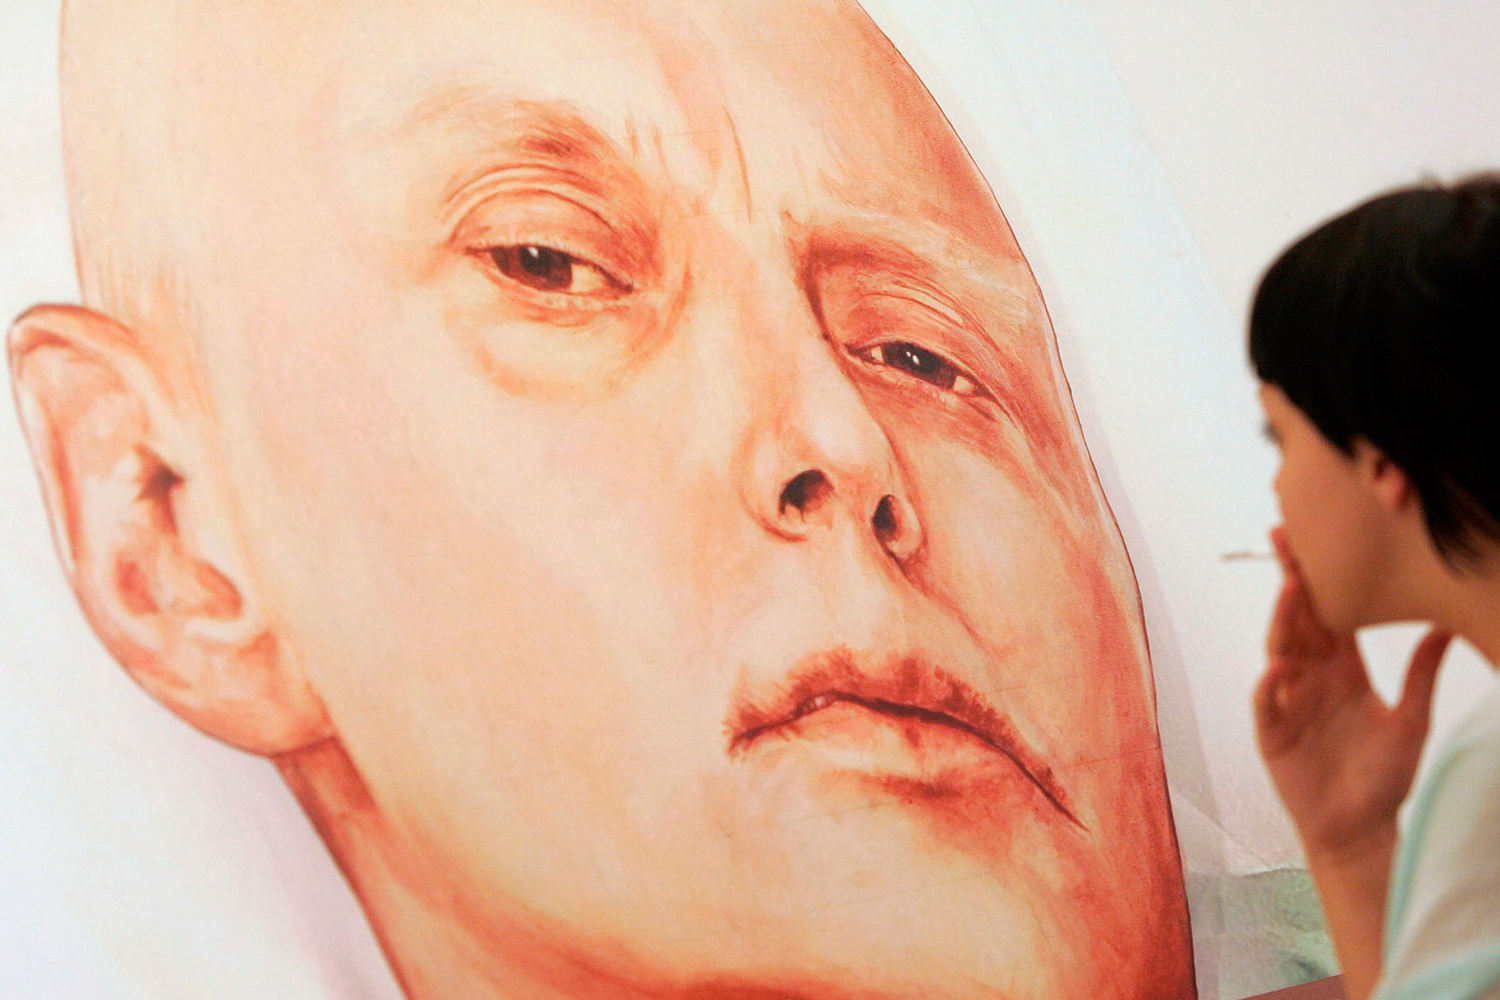 La Justicia británica dice que "probablemente" Putin ordenó matar al exespía Litvinenko